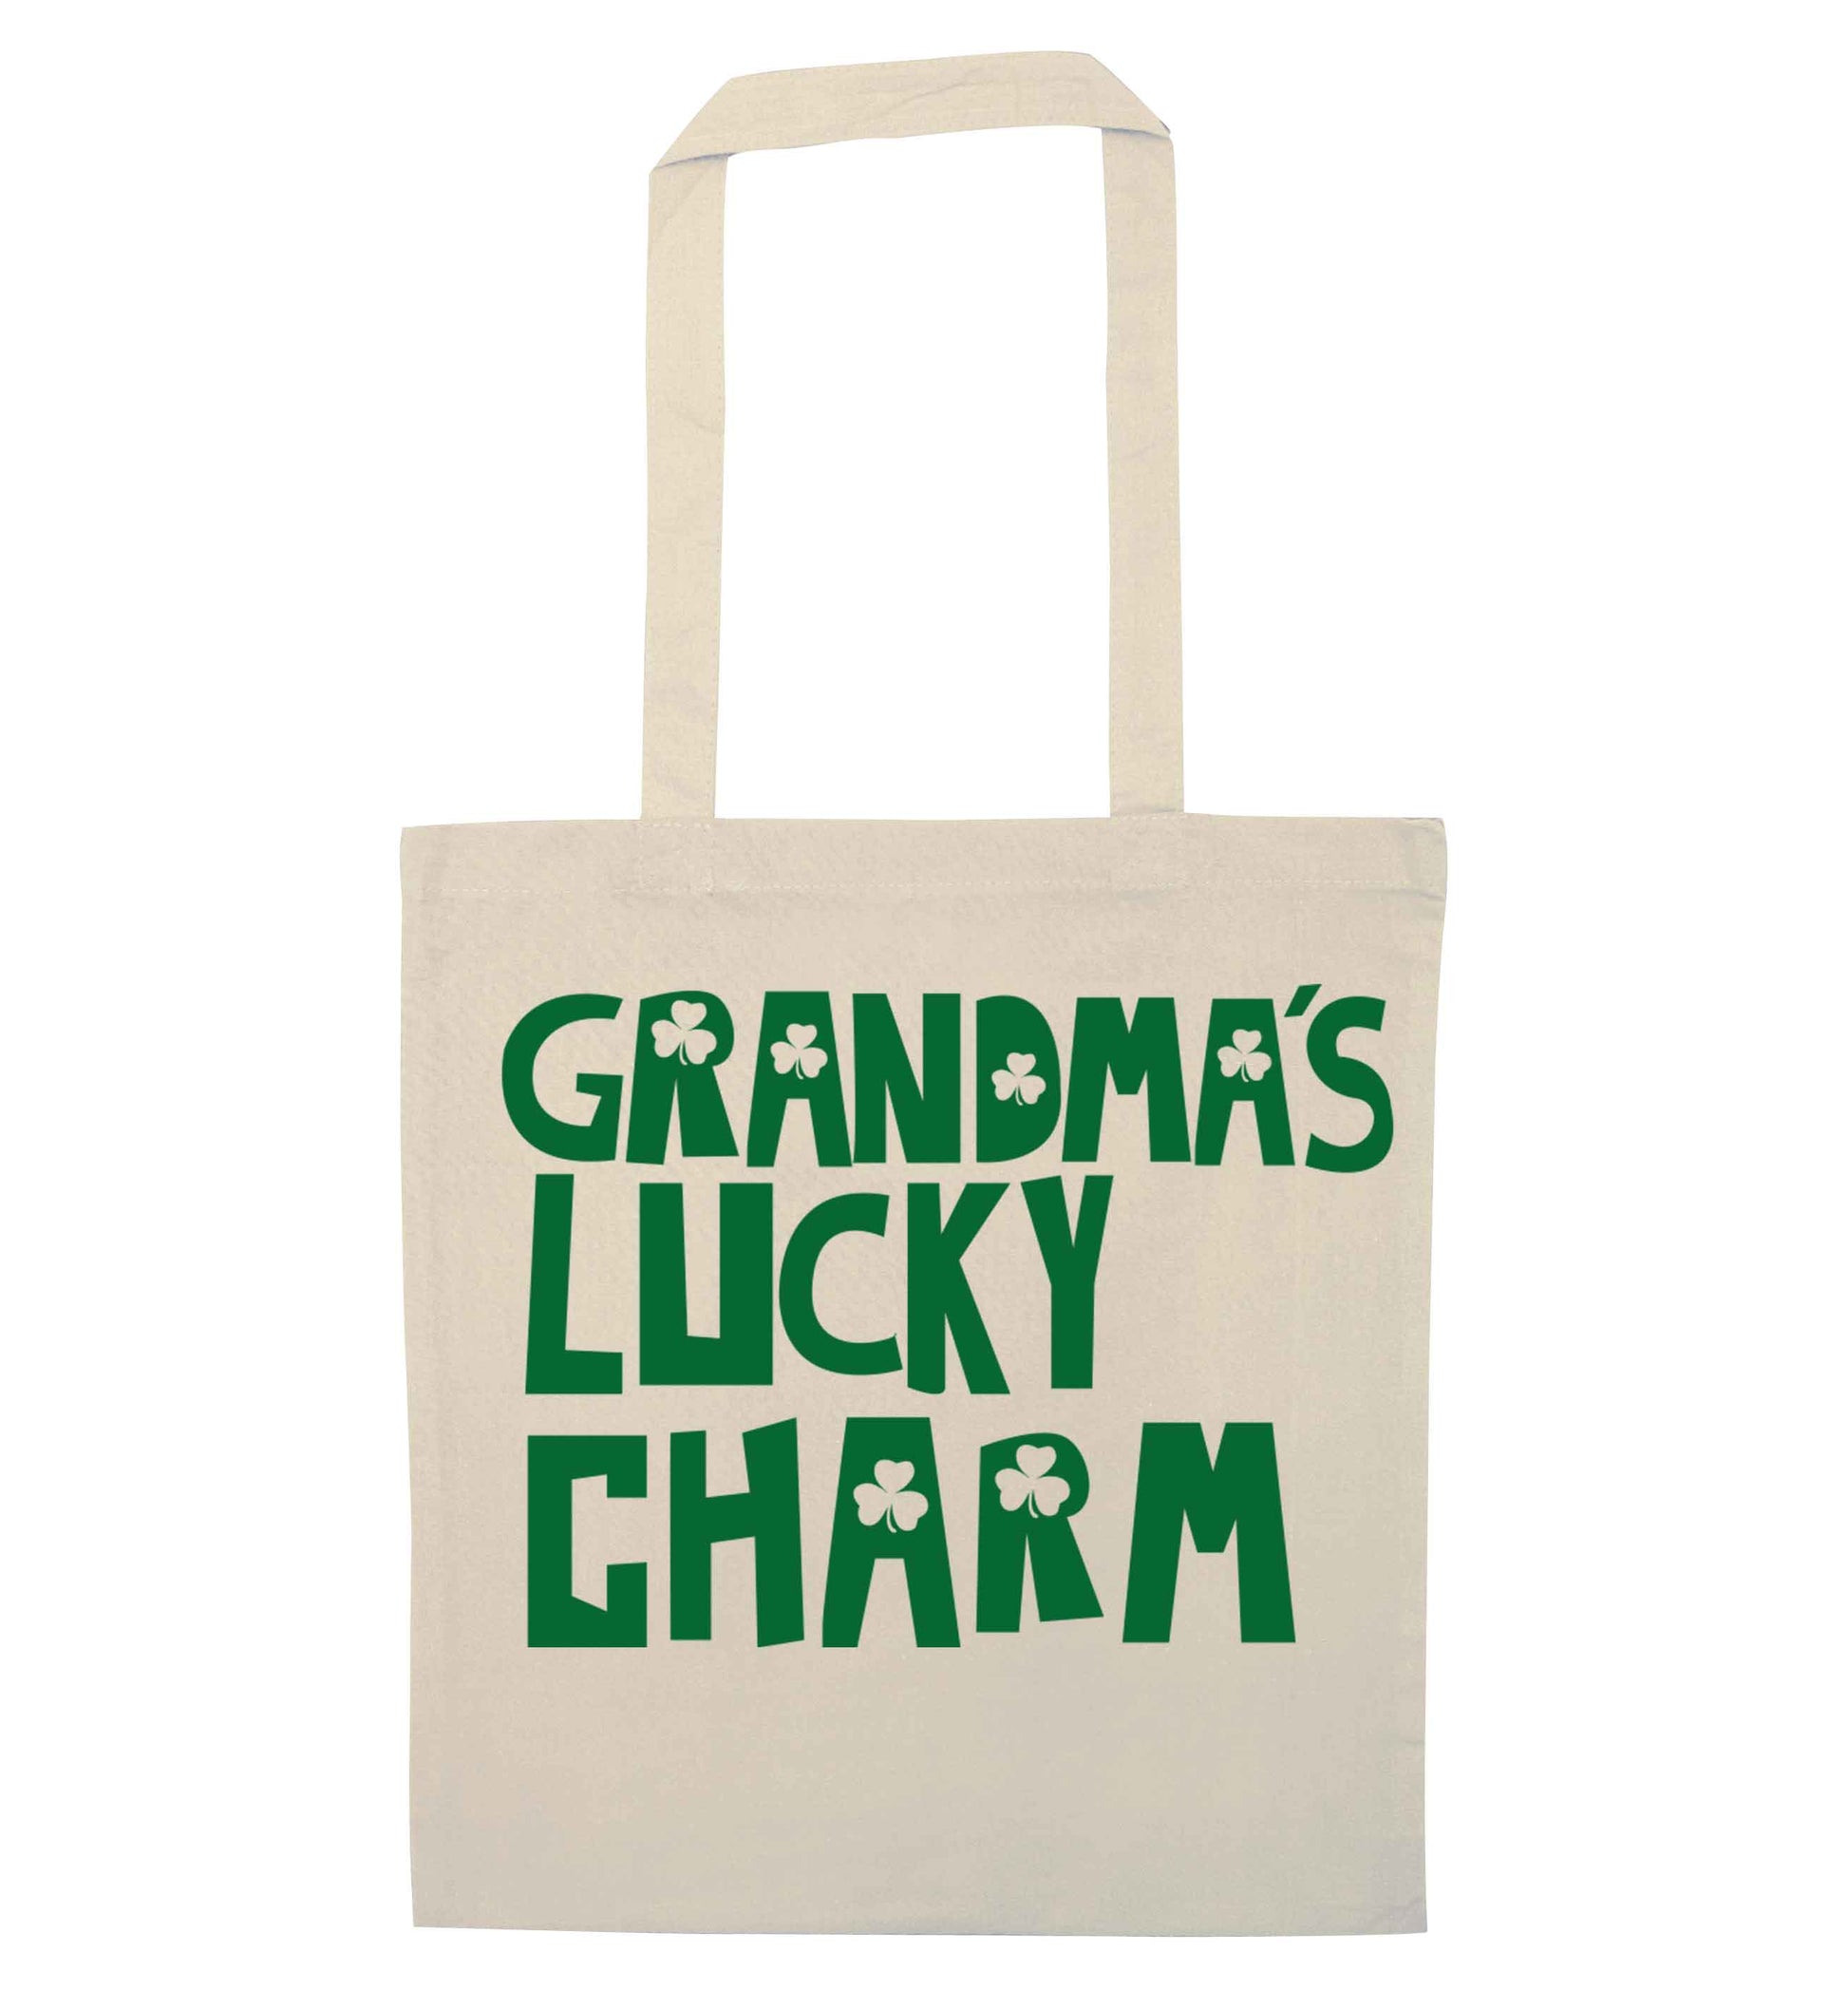 Grandma's lucky charm natural tote bag